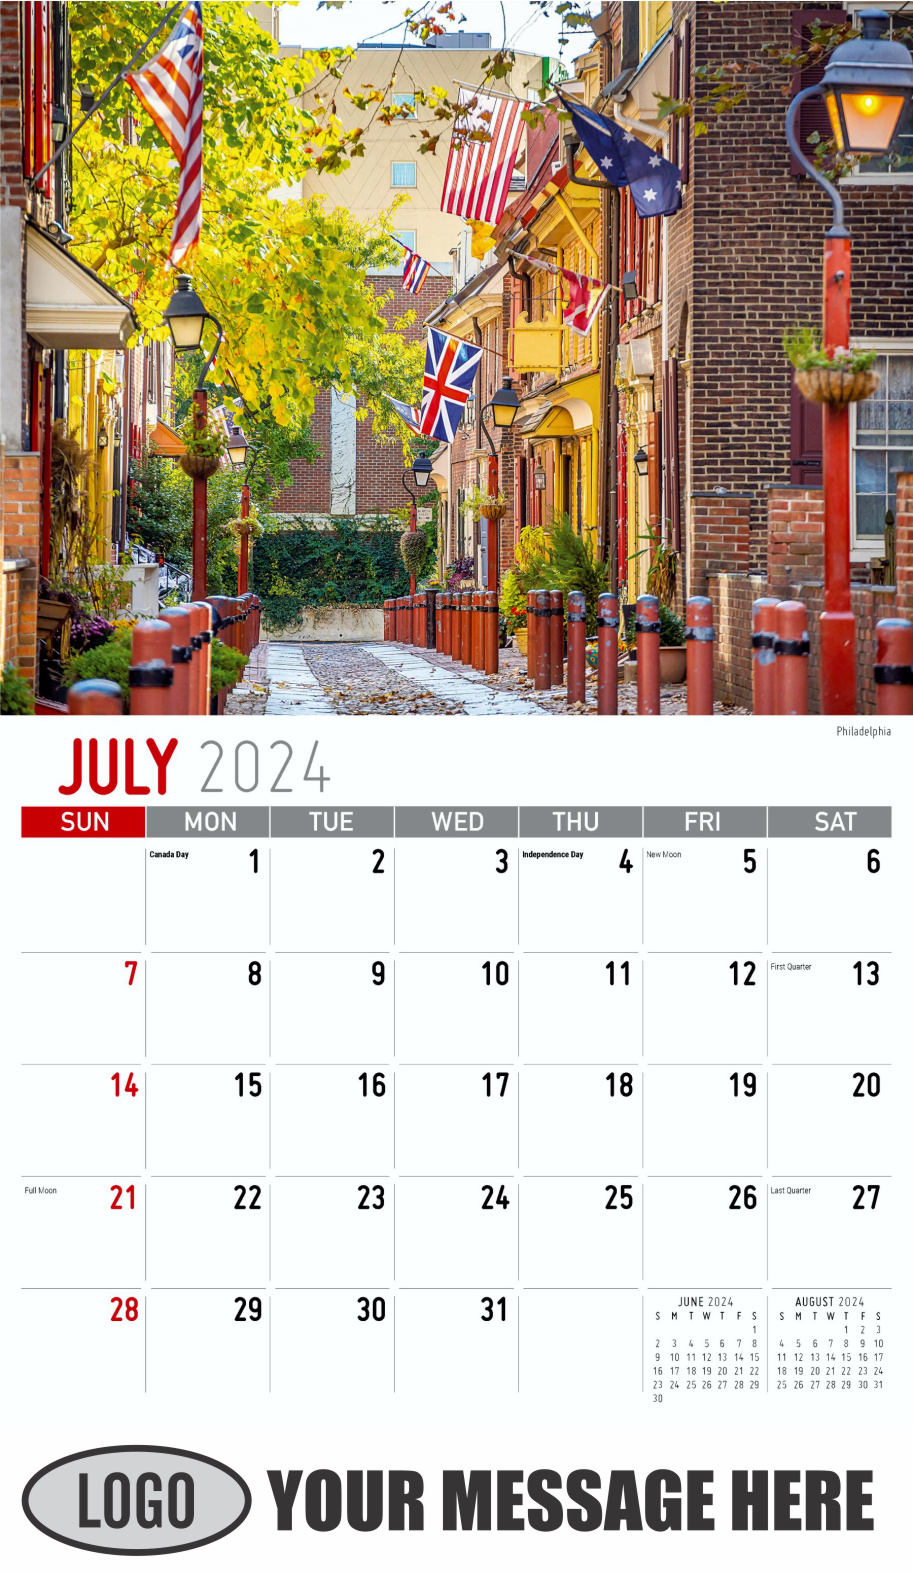 Scenes of Pennsylvania 2024 Business Promotion Calendar - July